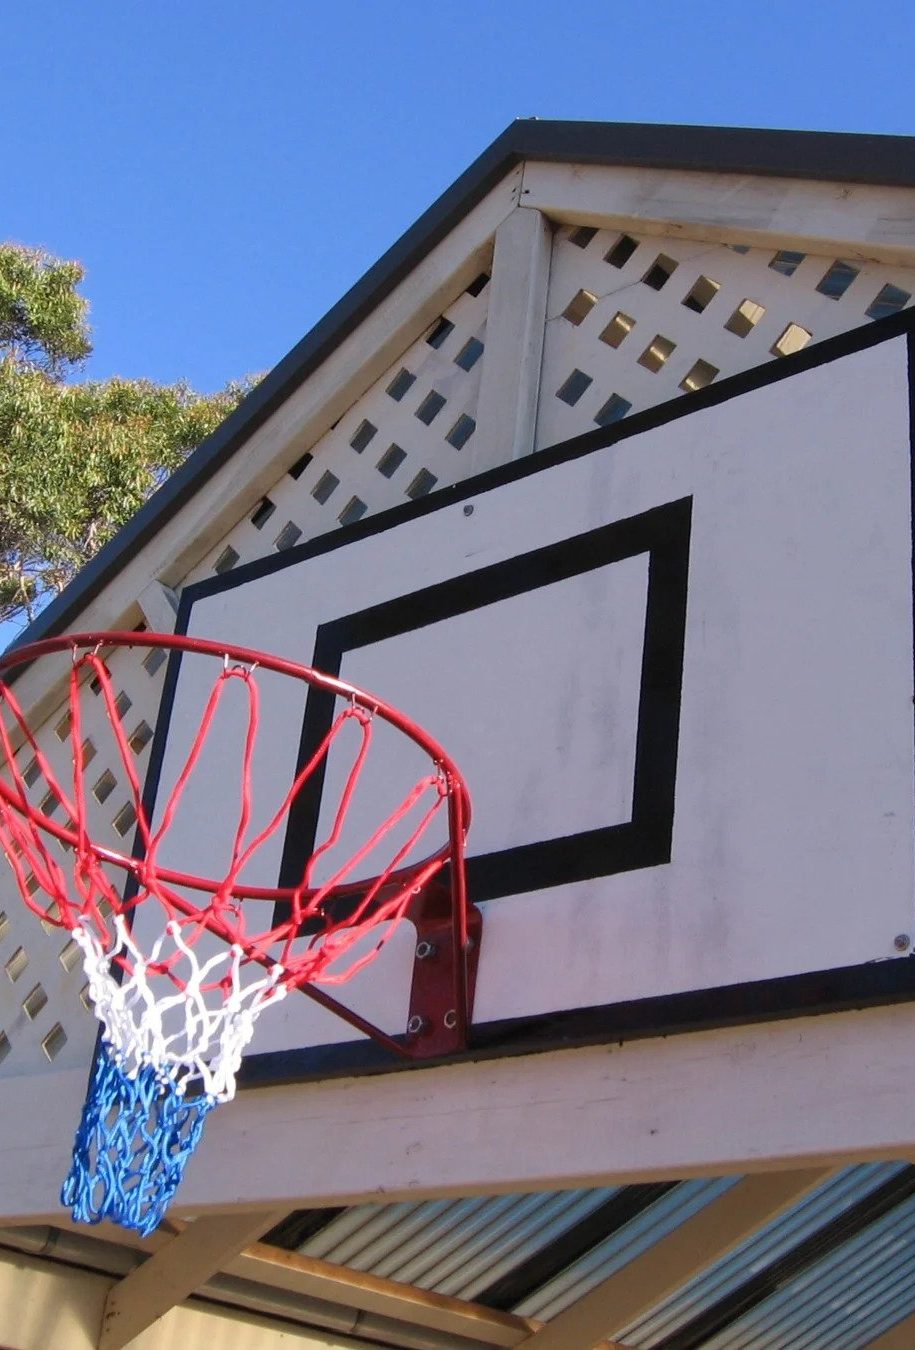 How to Make A Homemade Outdoor Basketball Hoop?